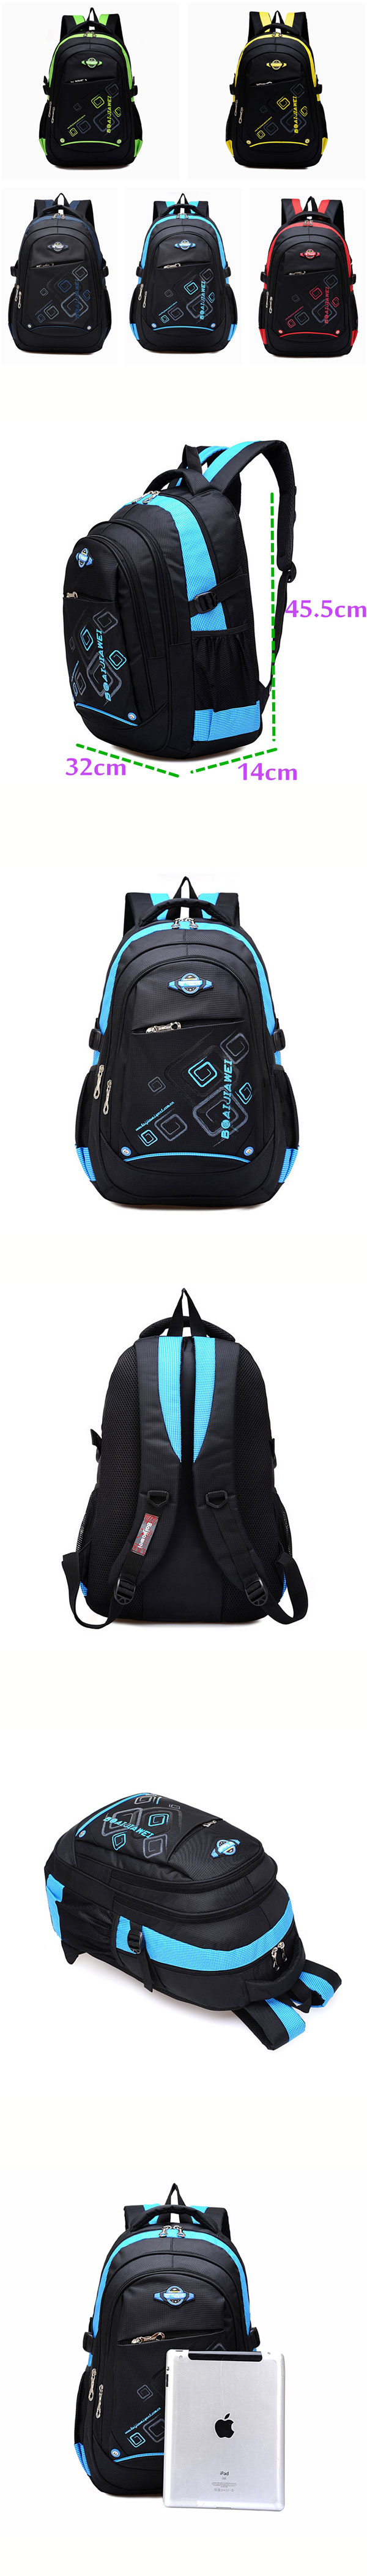 Waterproof-Children-School-Bag-Girls-Boys-Travel-Backpack-Shoulder-Bag-998515